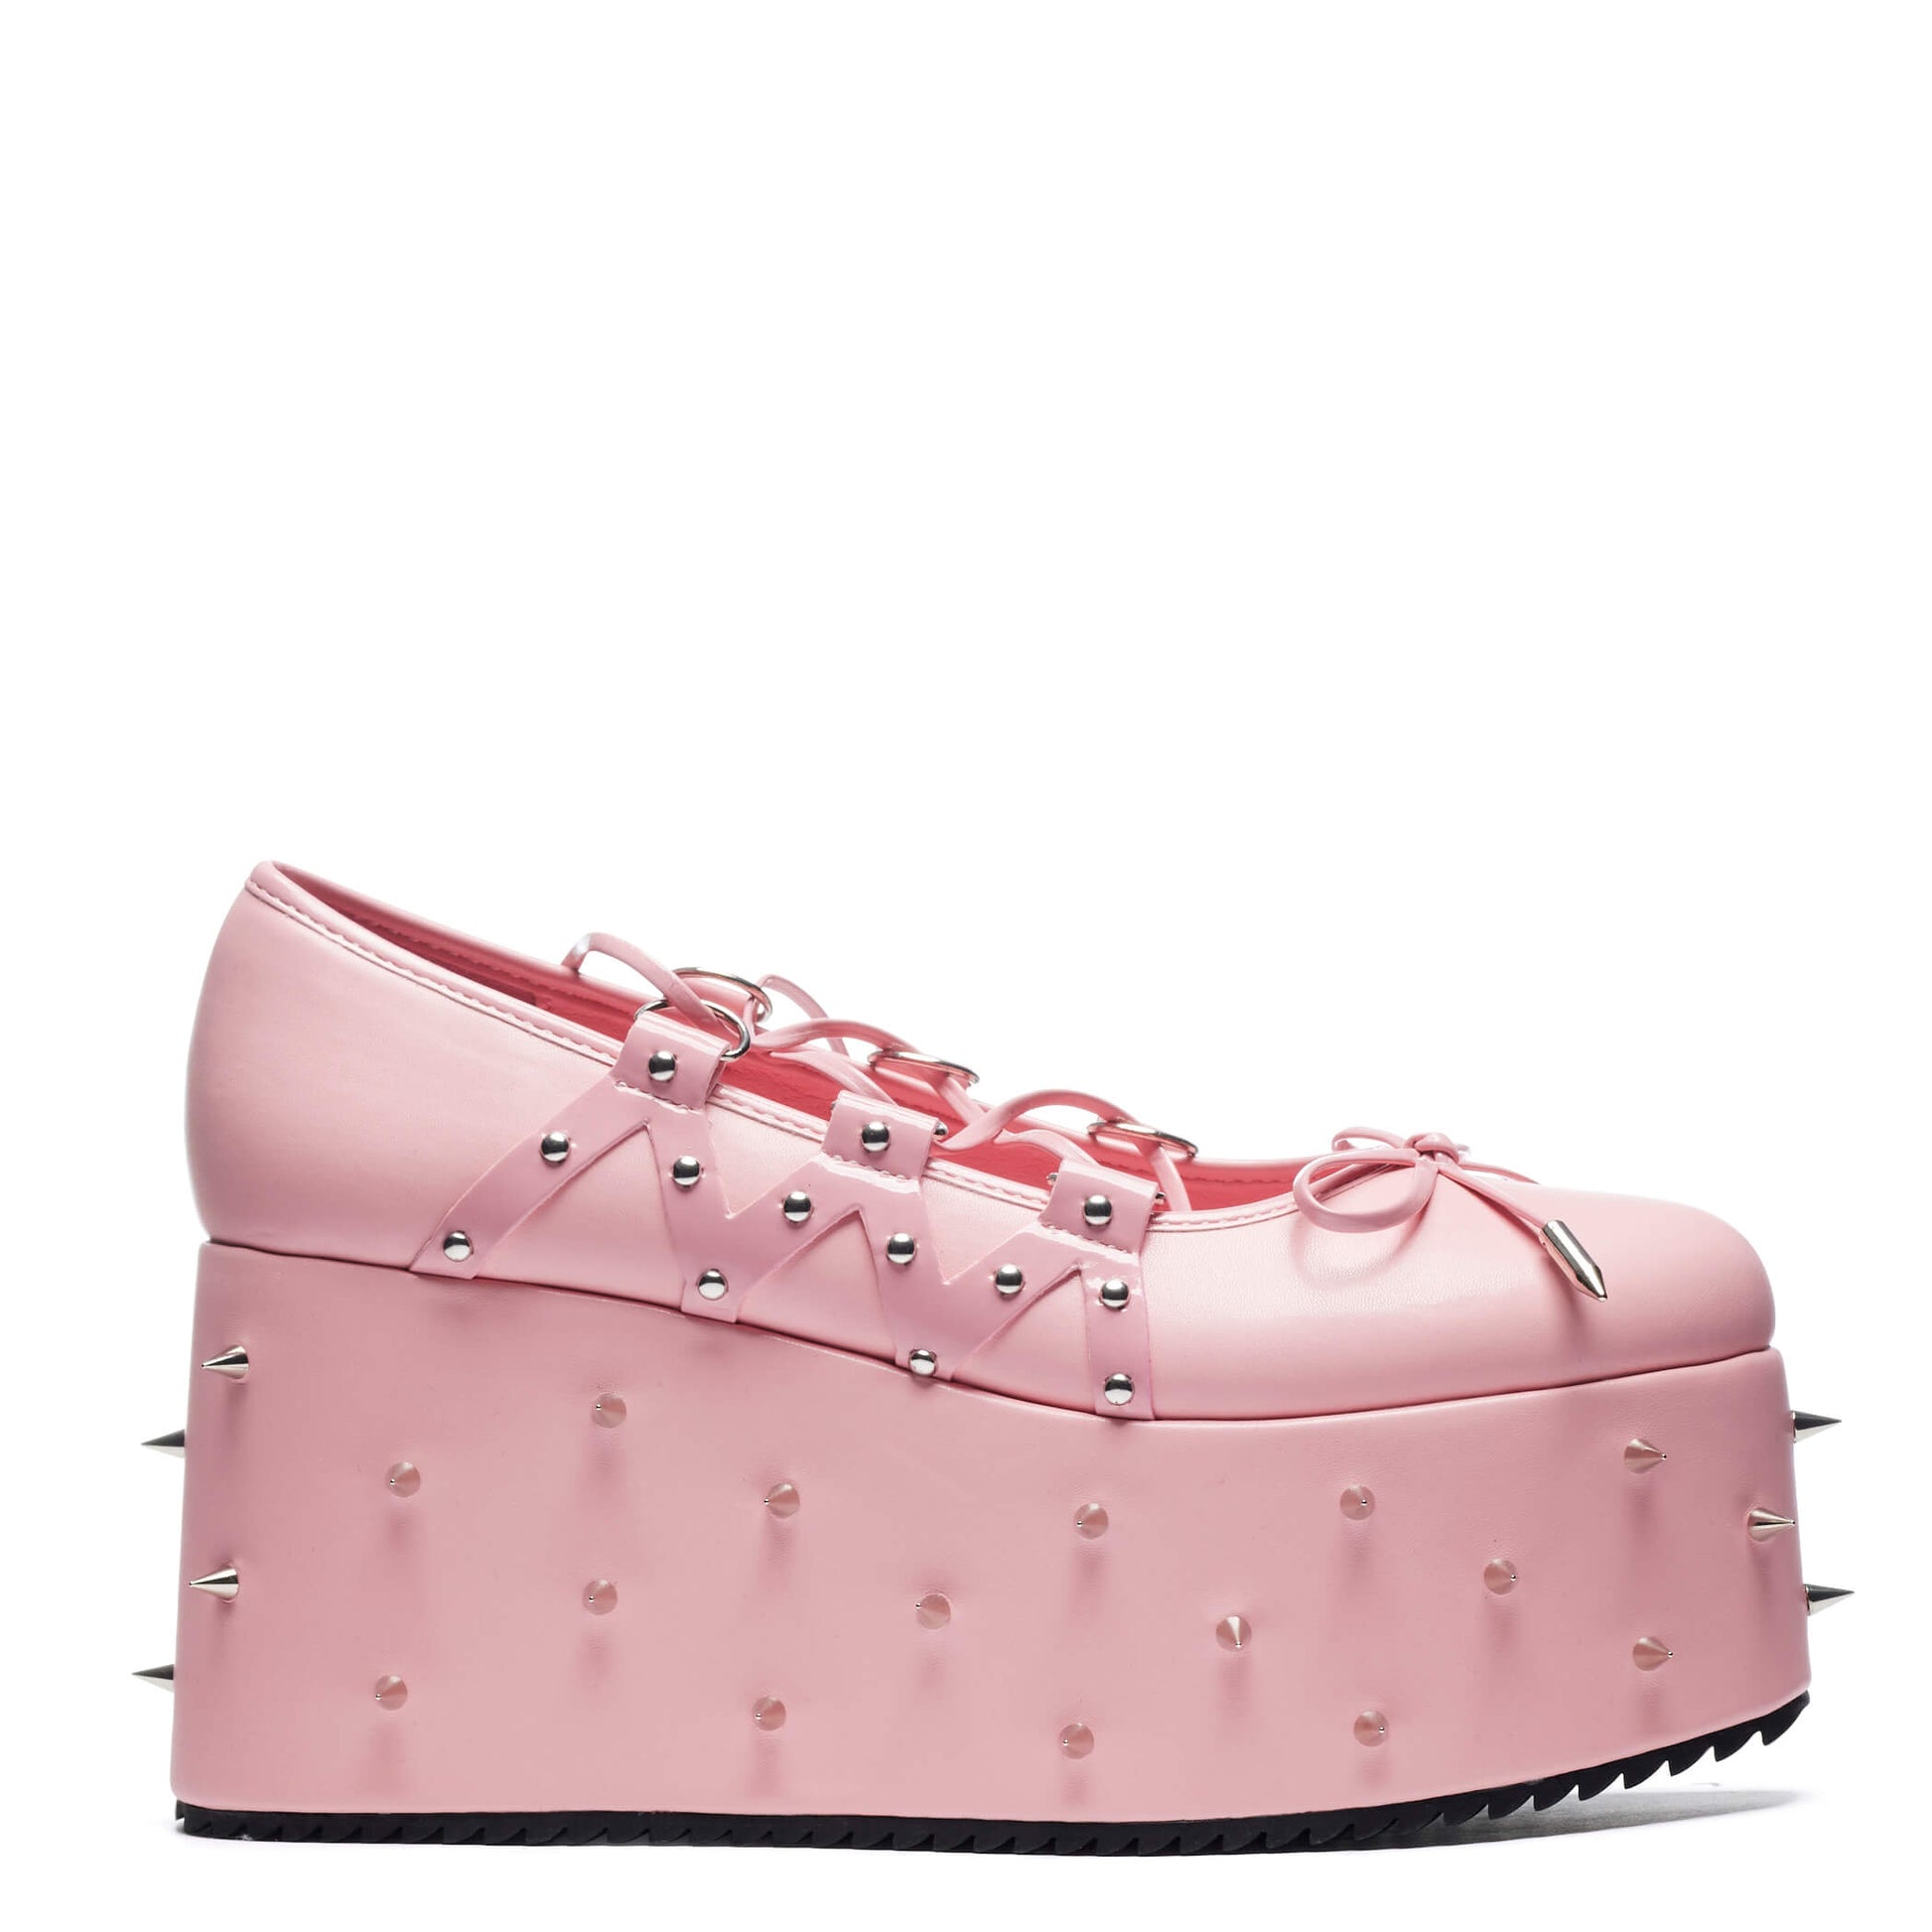 Zorina Lace Up Platform Ballet Shoes - Pink - Koi Footwear - Side View